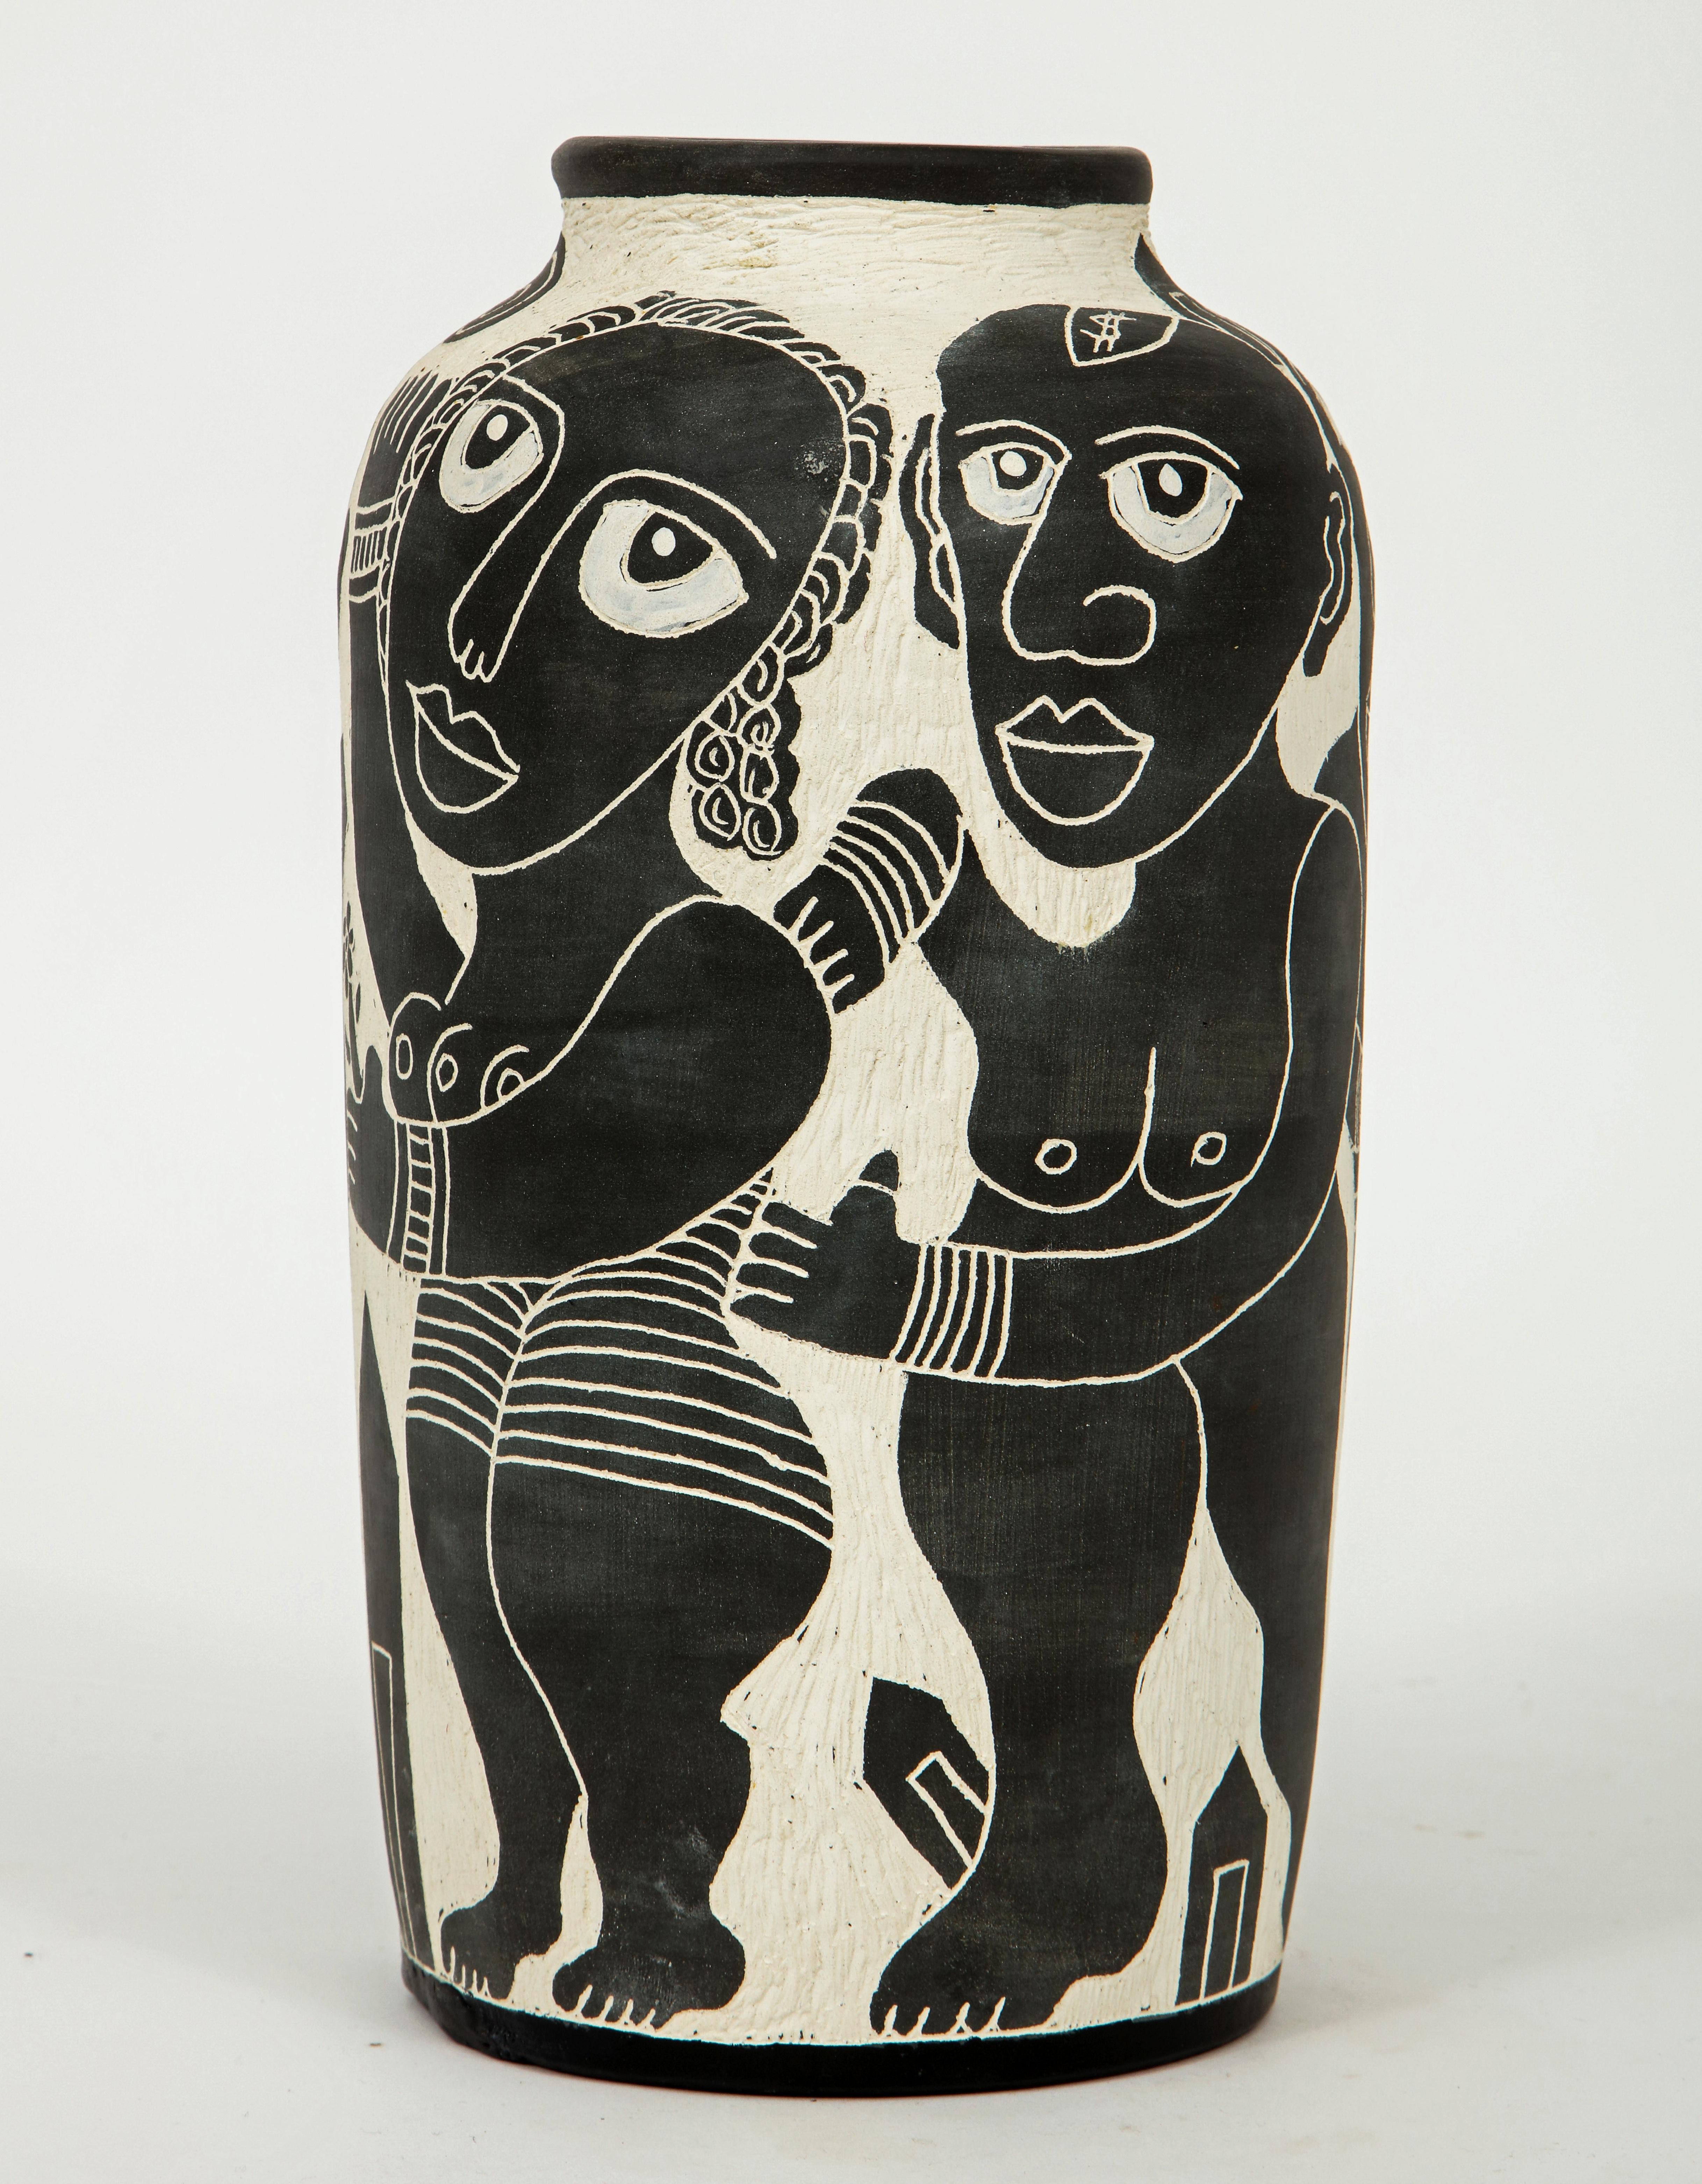 American Black and White Vase by Ledesma